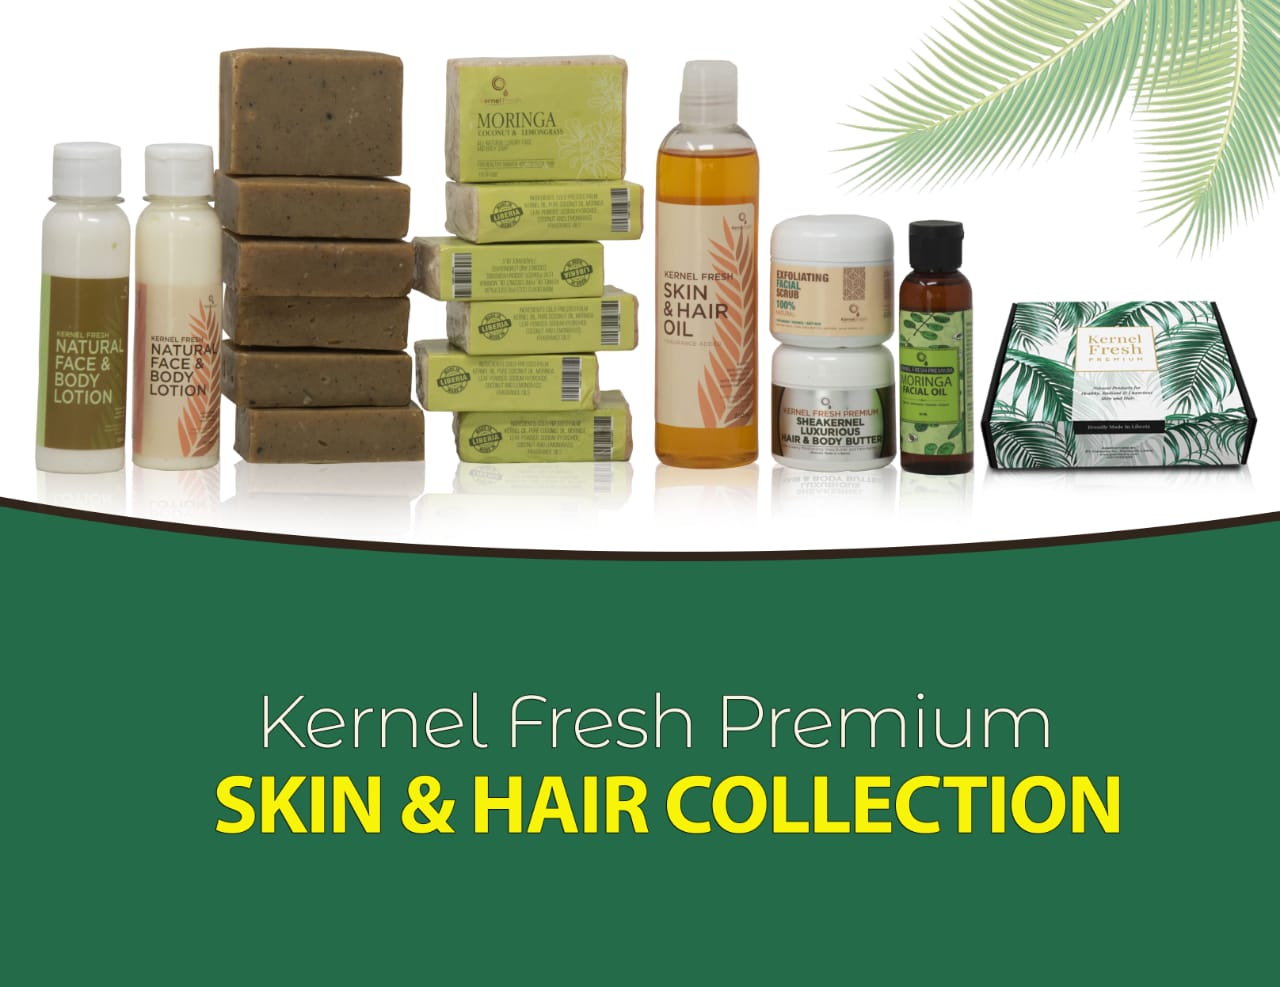 Kernel Fresh Premium Skin & Hair Collection